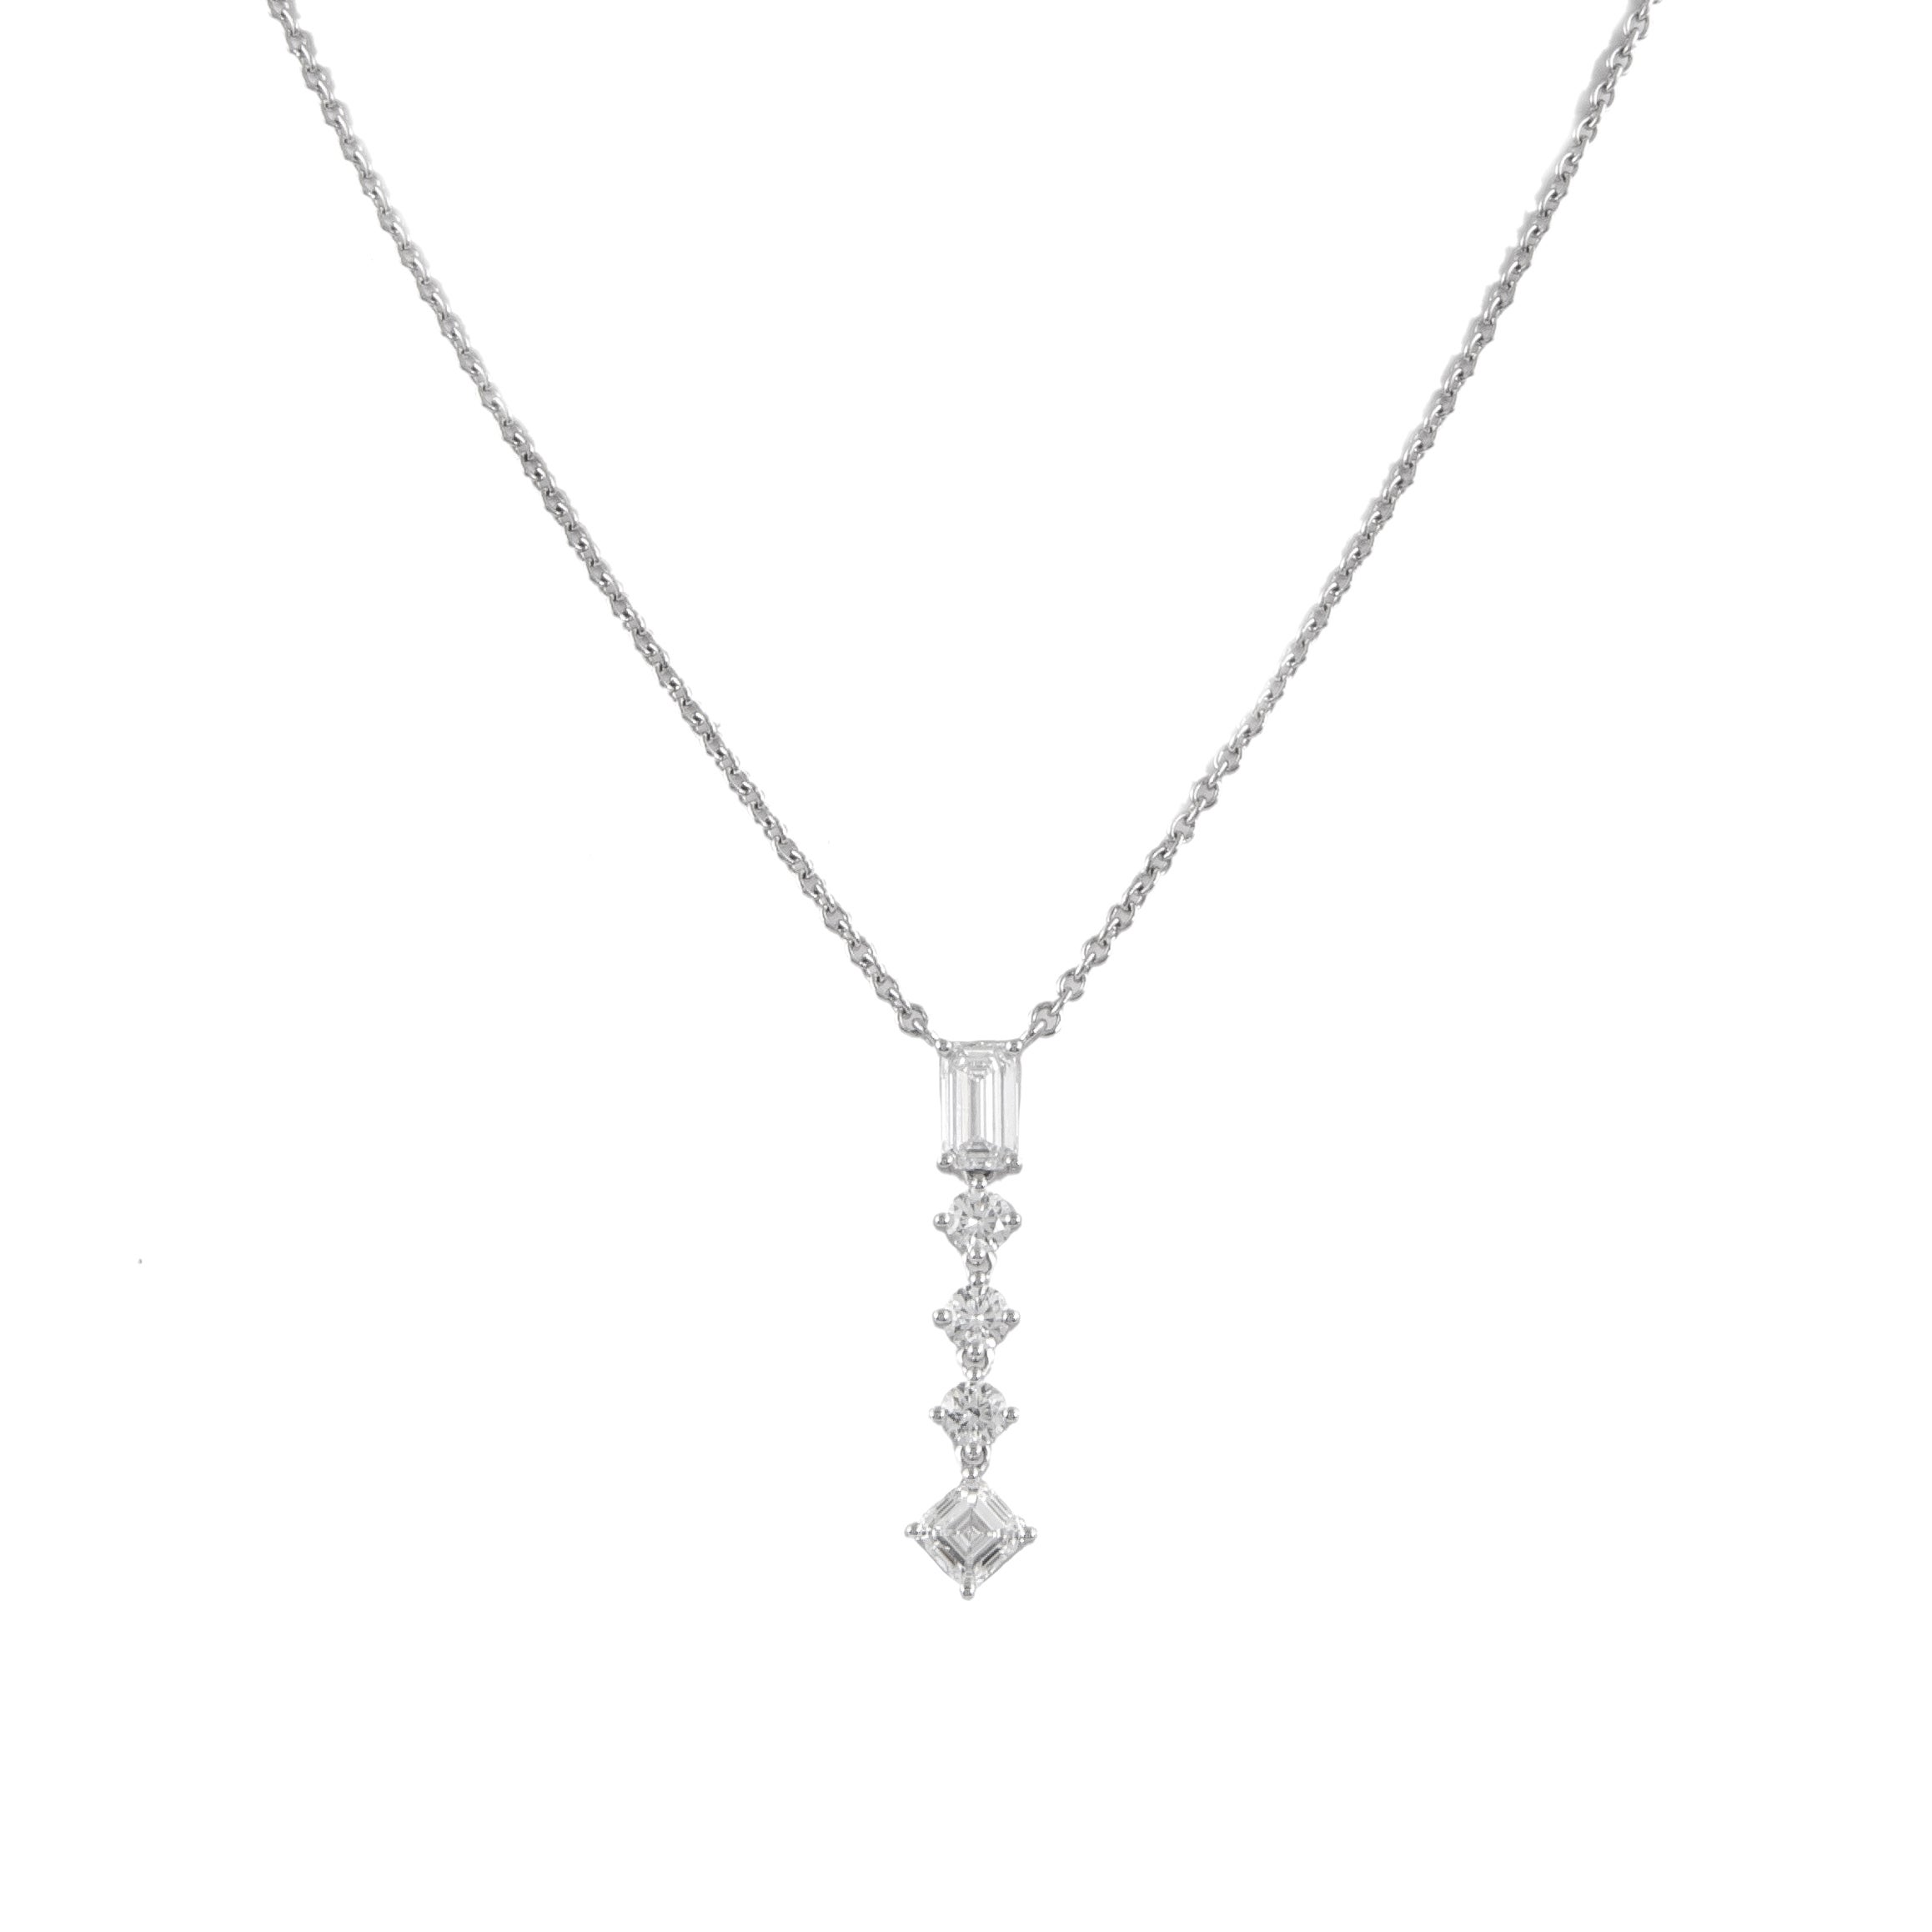 Emerald Cut Alexander GIA Certified 1.56ctt Diamond Pendant Necklace 18k White Gold For Sale